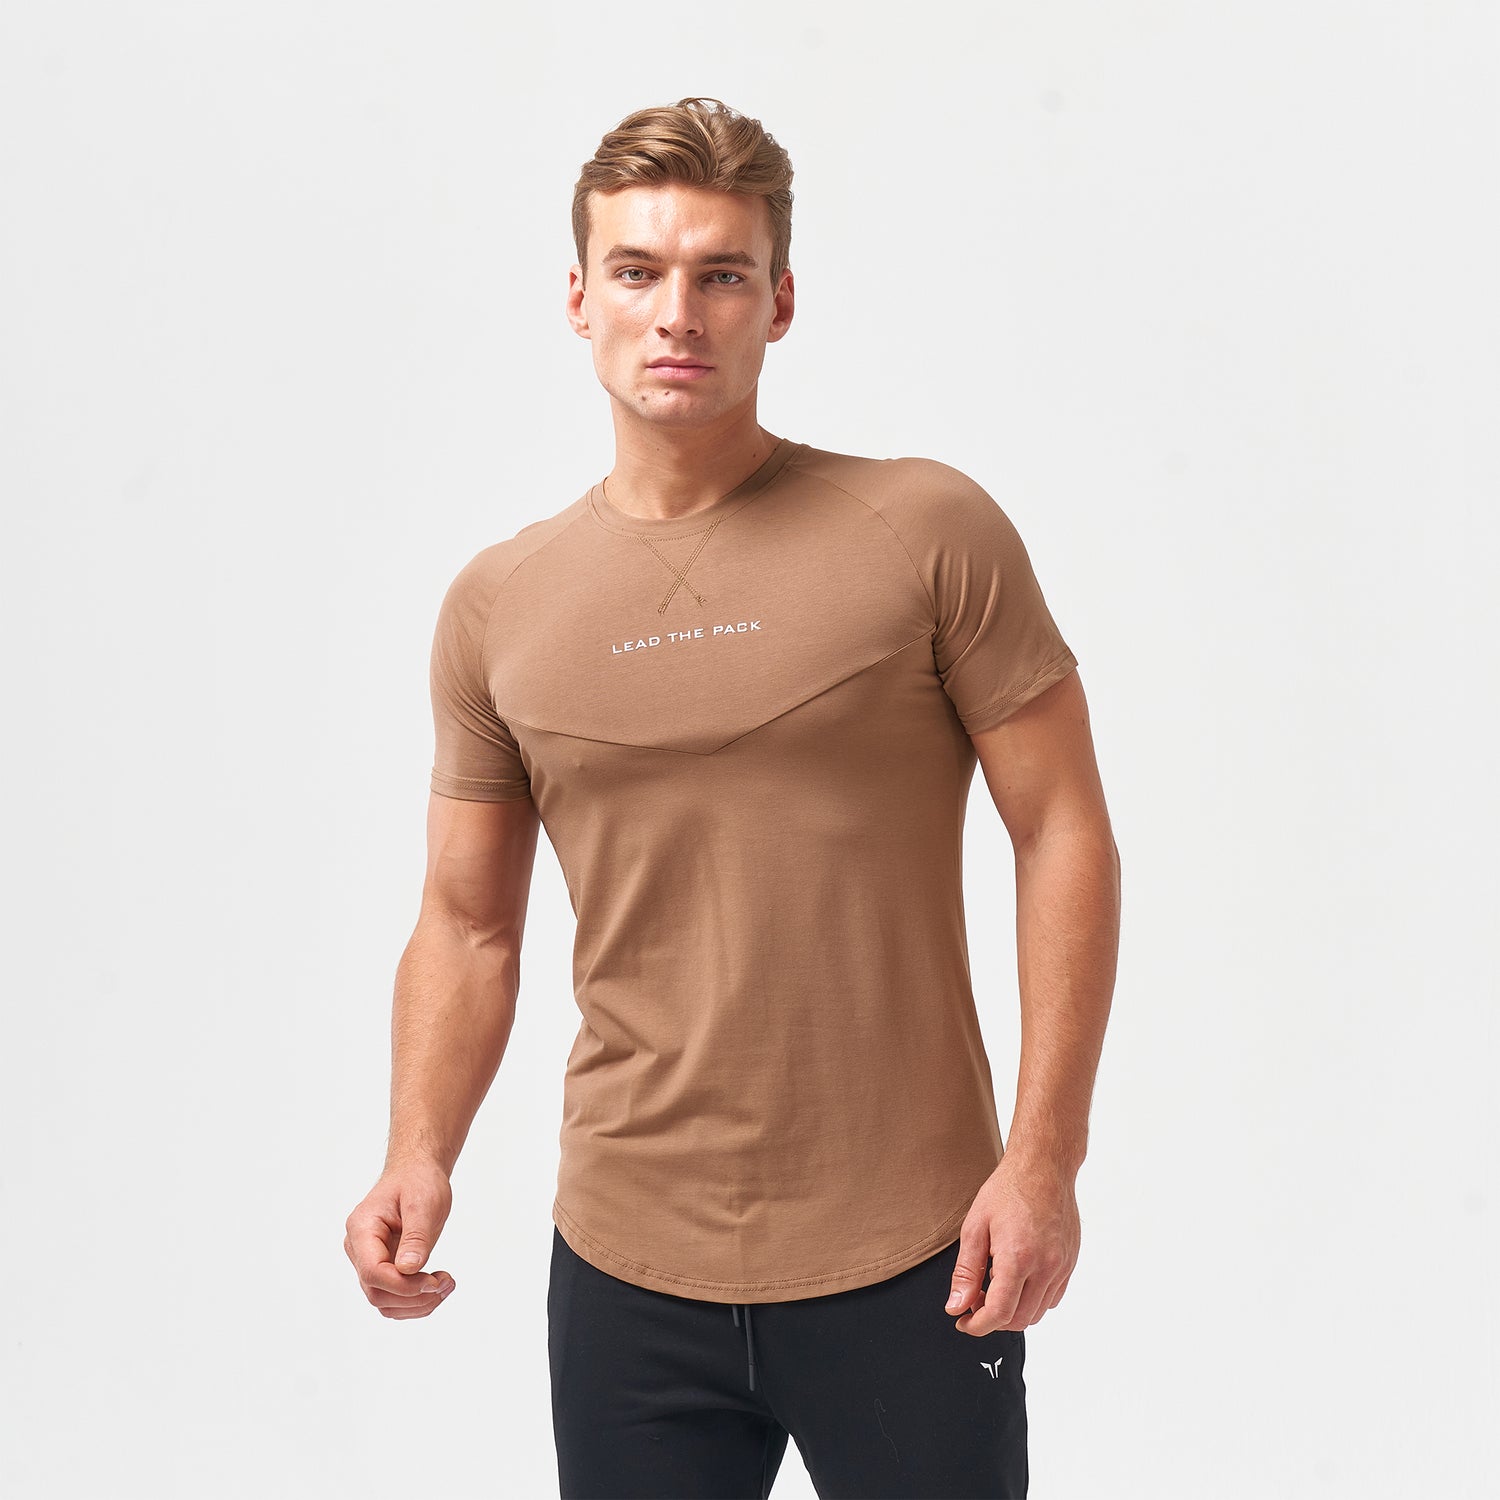 Men's Seamless Gym T-shirts